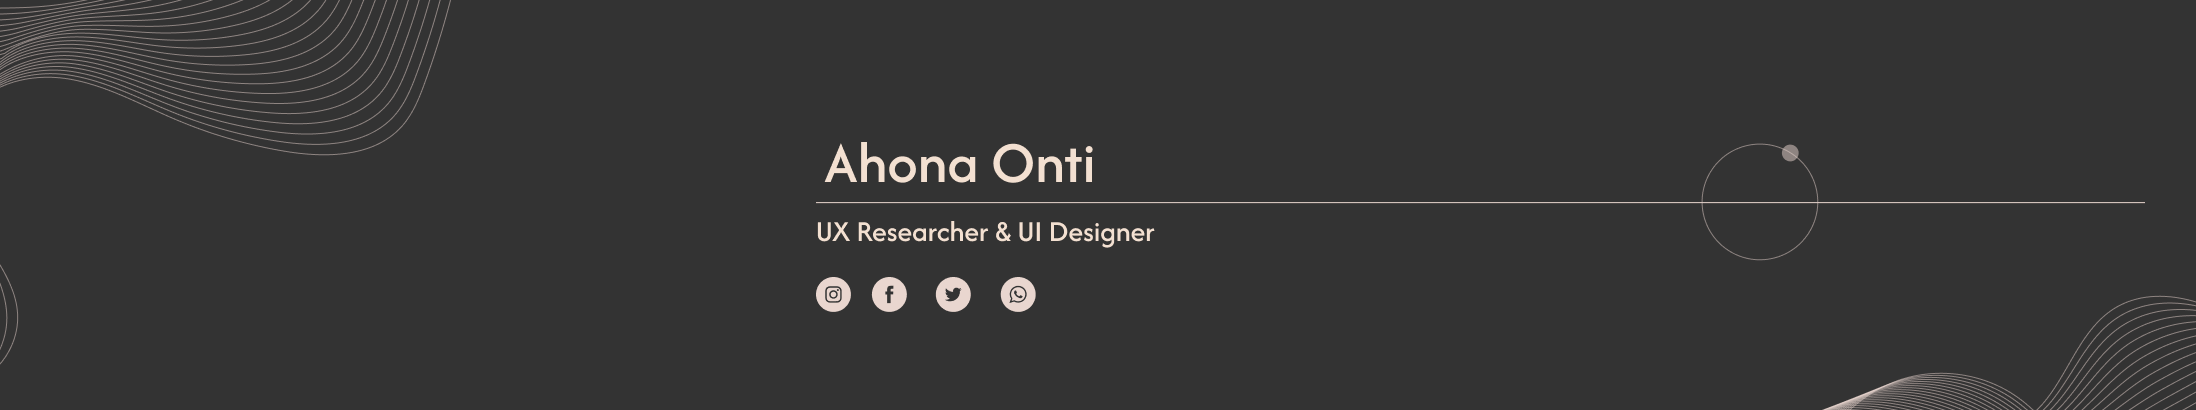 Ahona Onti's profile banner